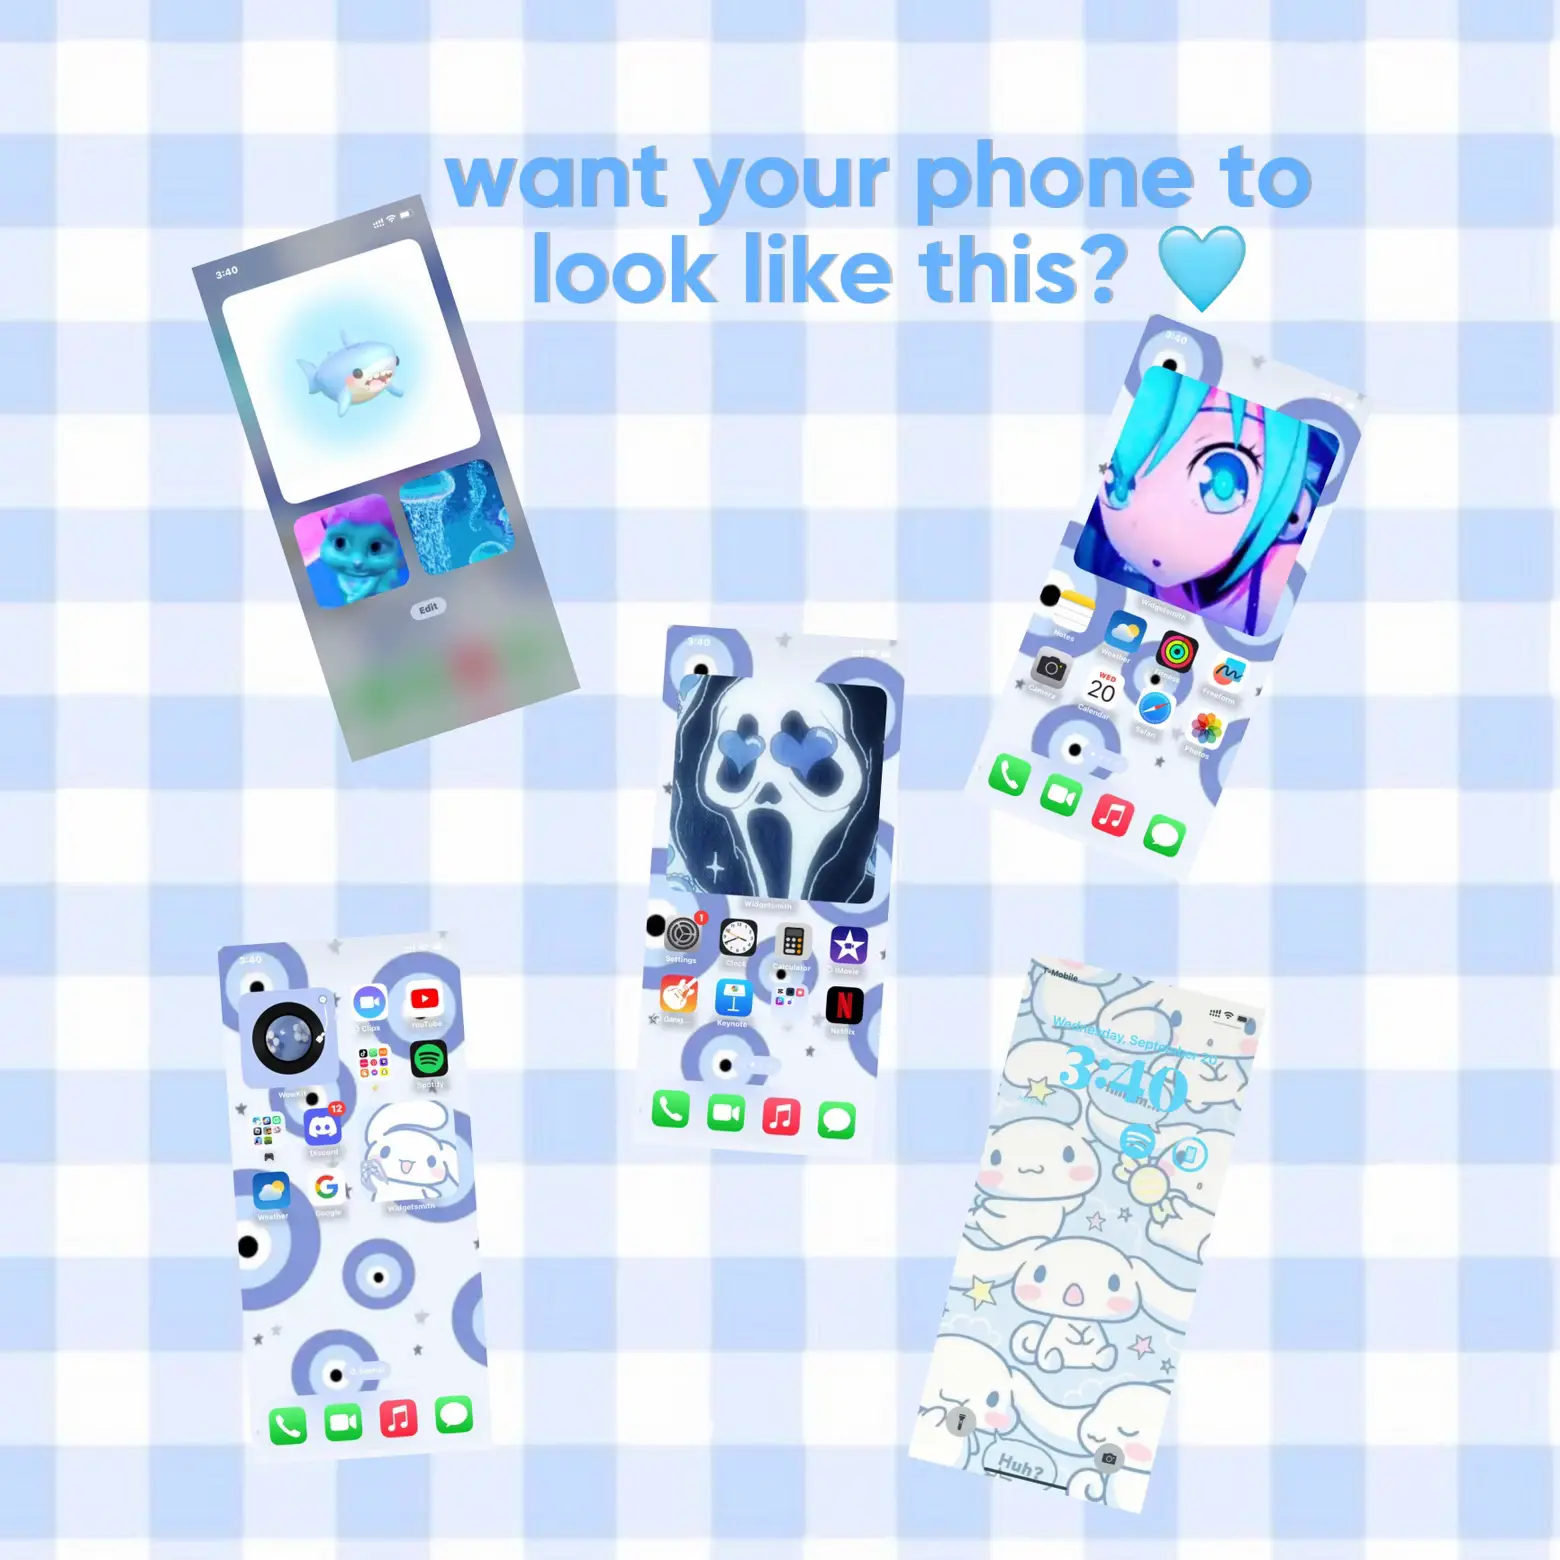 Sanrio Icon - Instagram My Melody  Hello kitty iphone wallpaper, Cute app,  Cute cartoon wallpapers